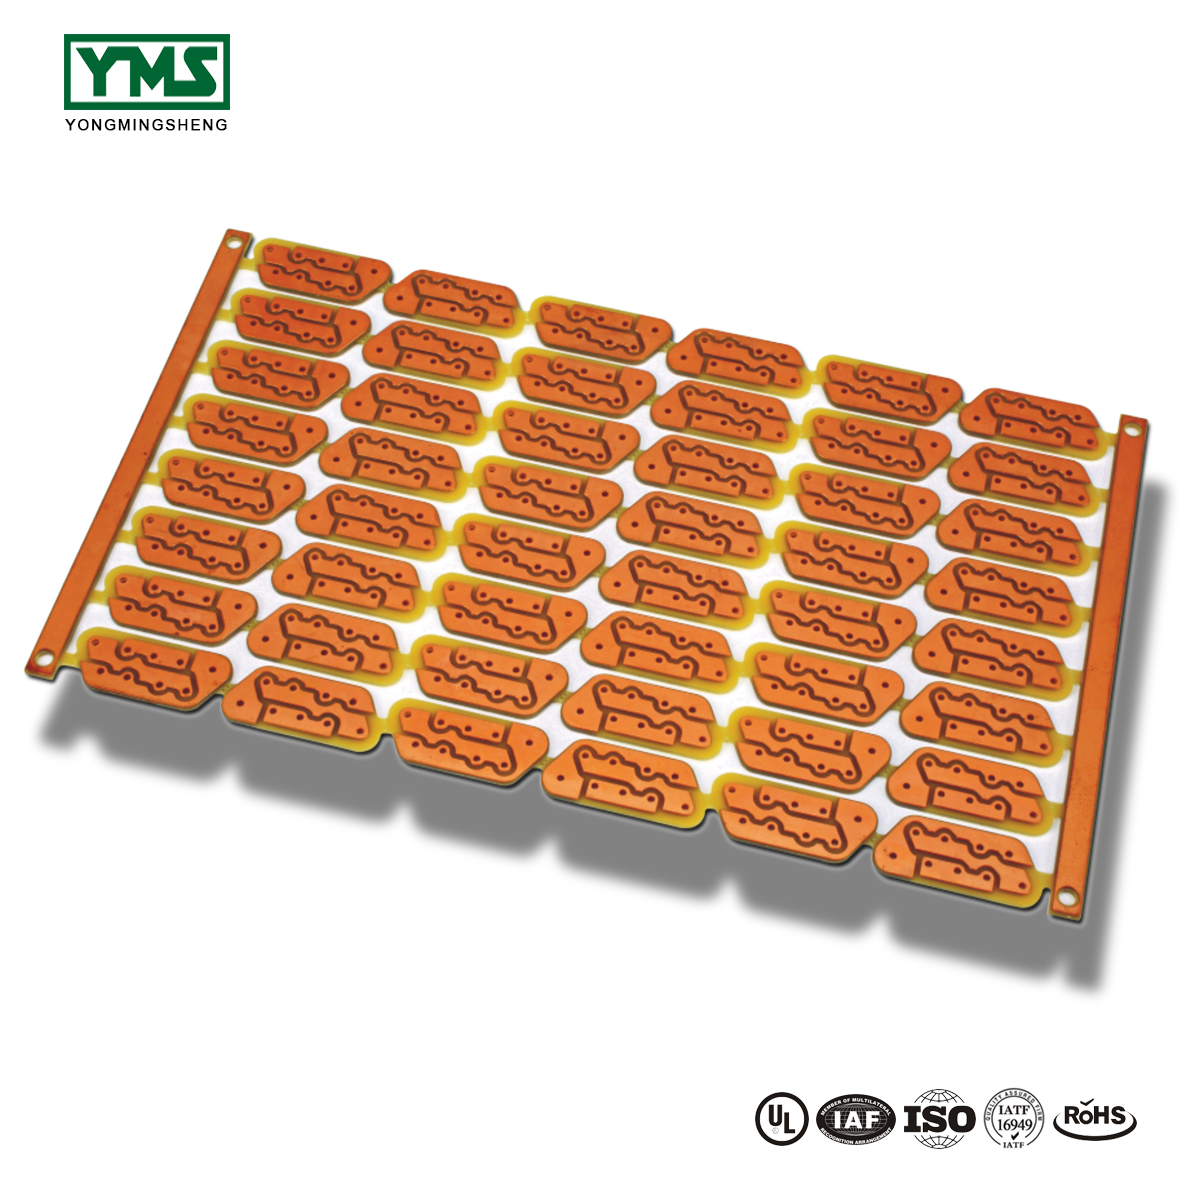 OEM/ODM Manufacturer Fr4 Ultra-Thin Pcb - 2 Layer 100z Heavy Copper Board | YMS PCB – Yongmingsheng